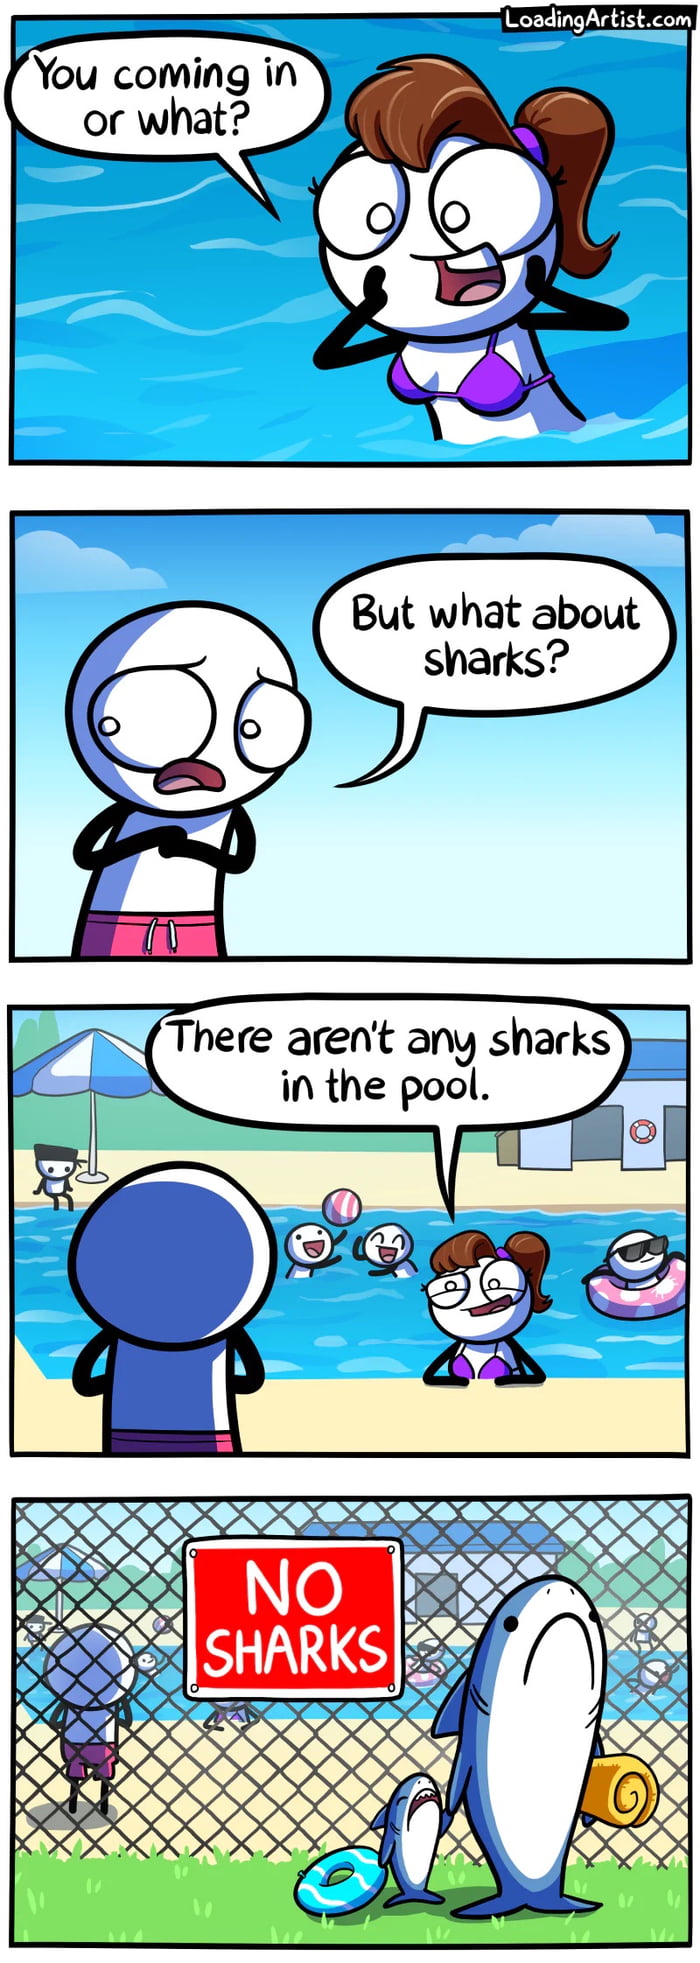 No sharks